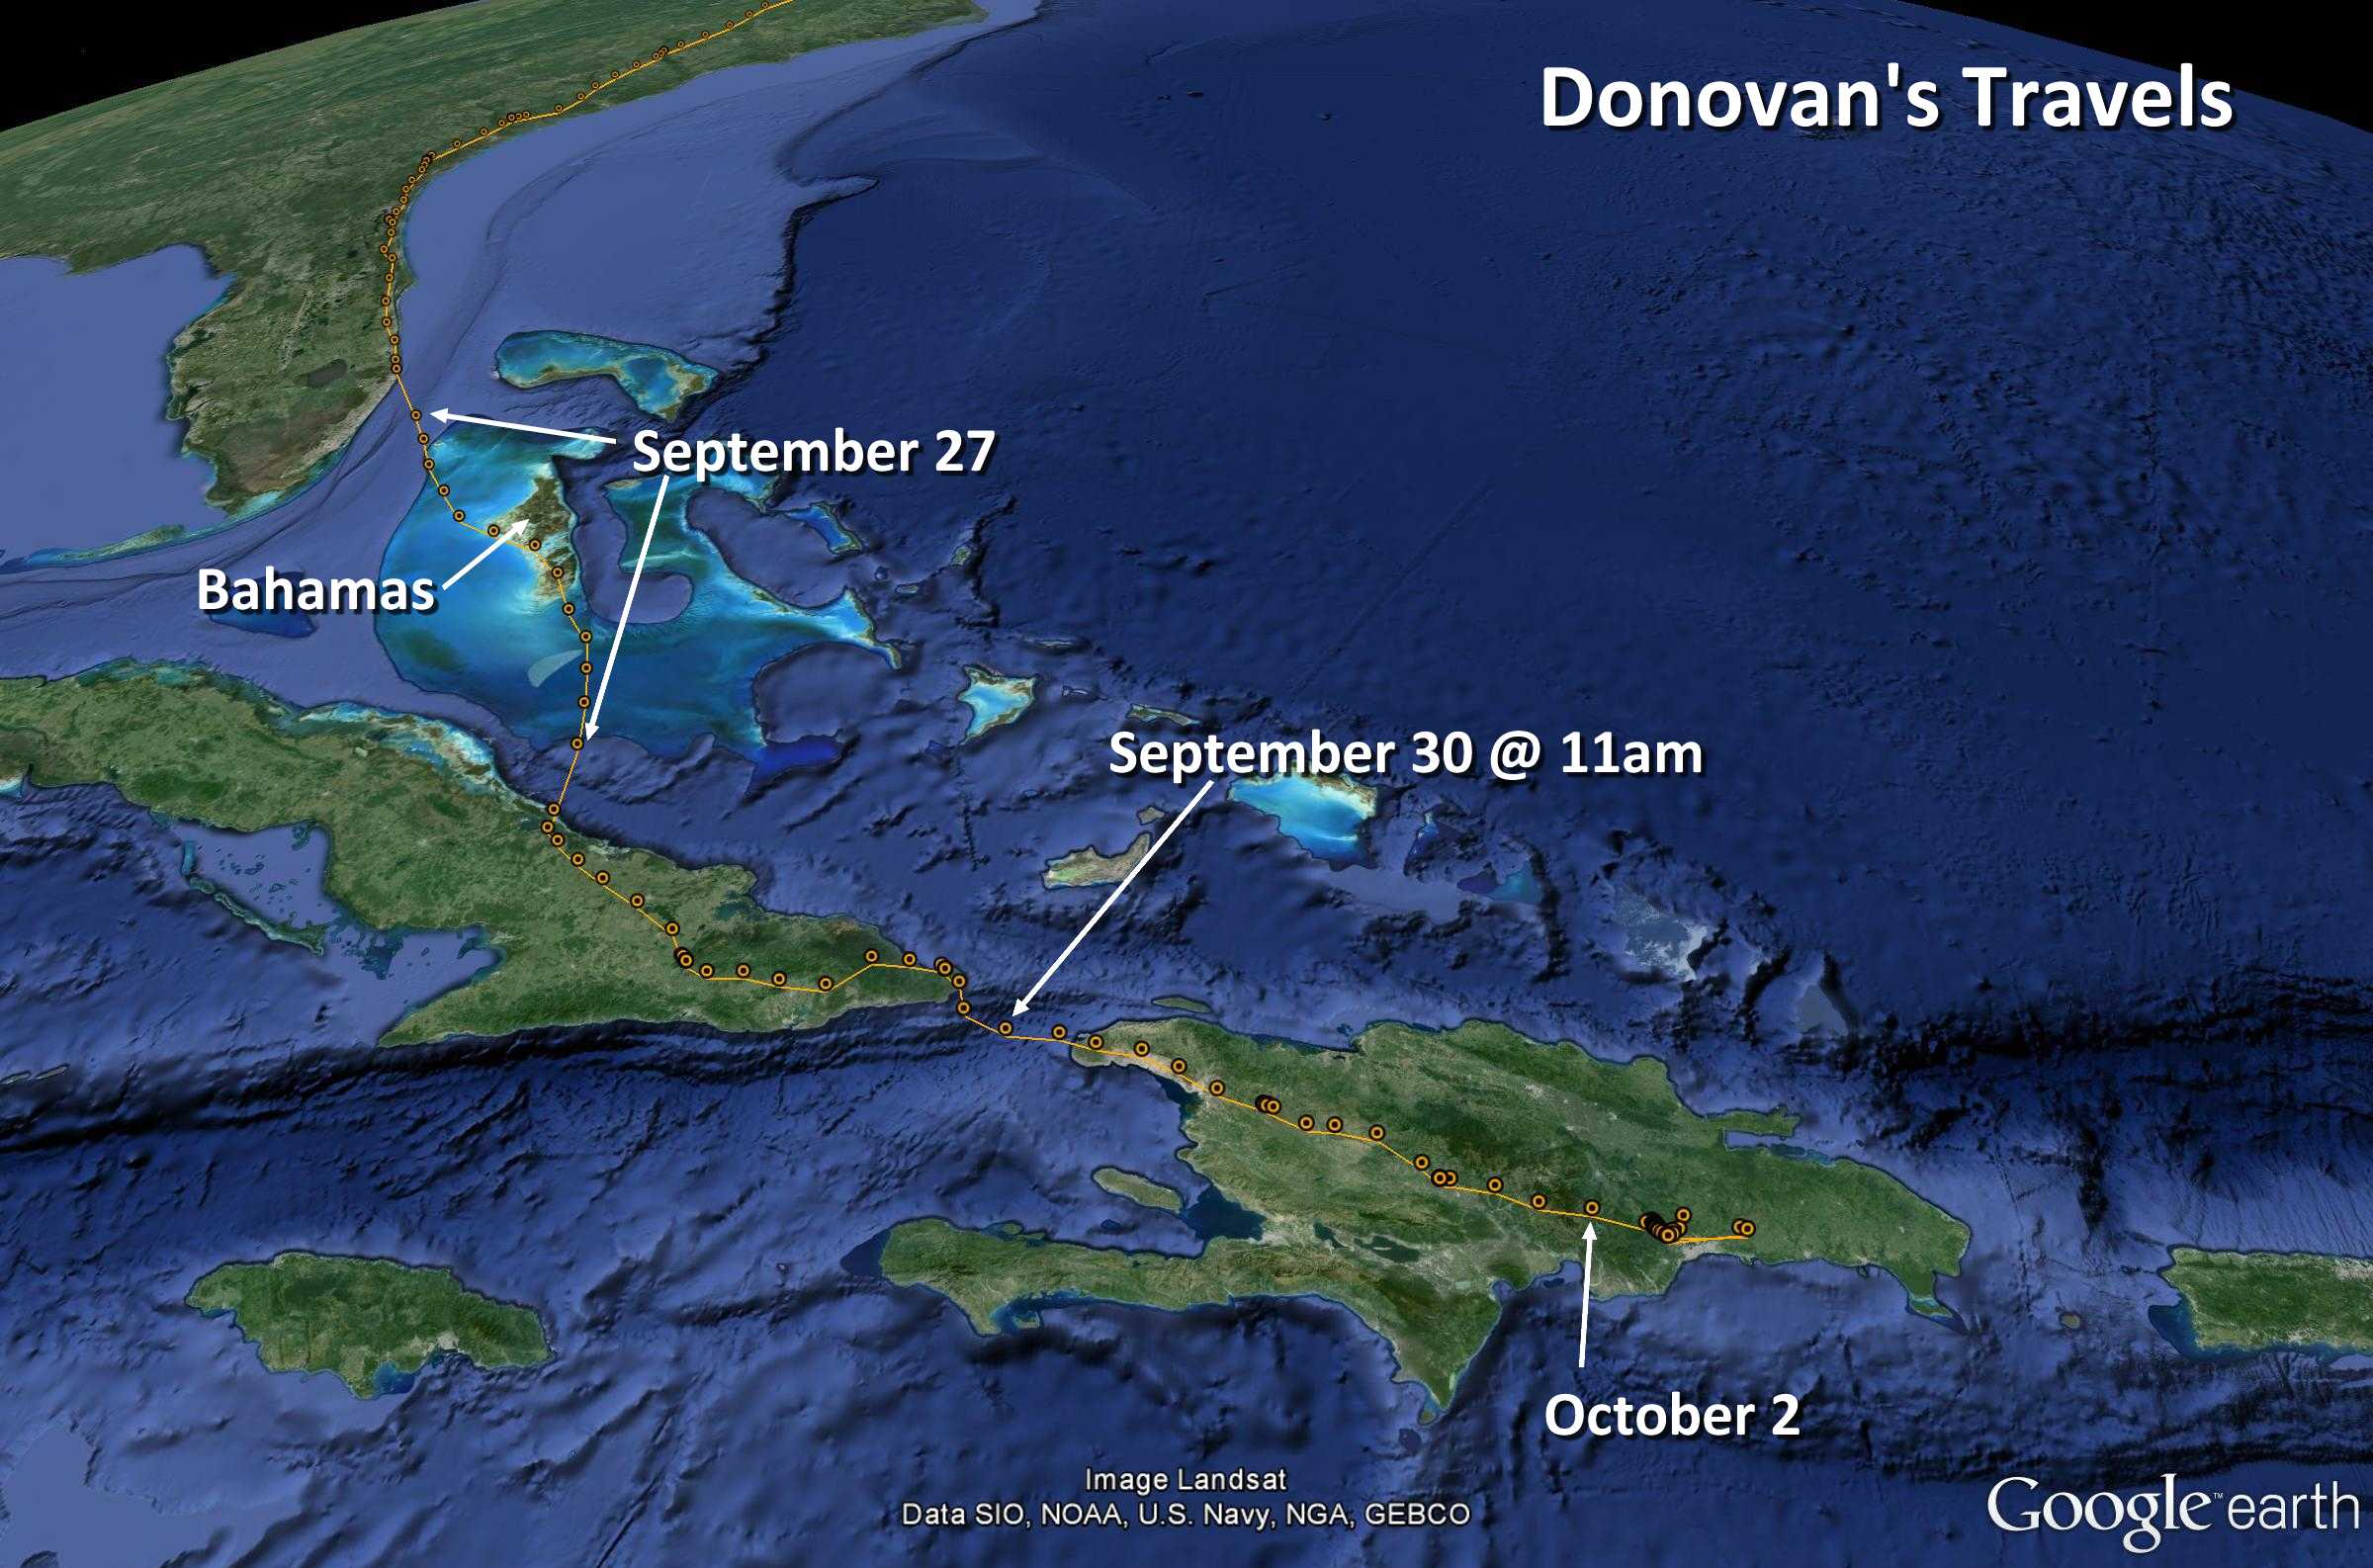 Donovan - October 5, 2013